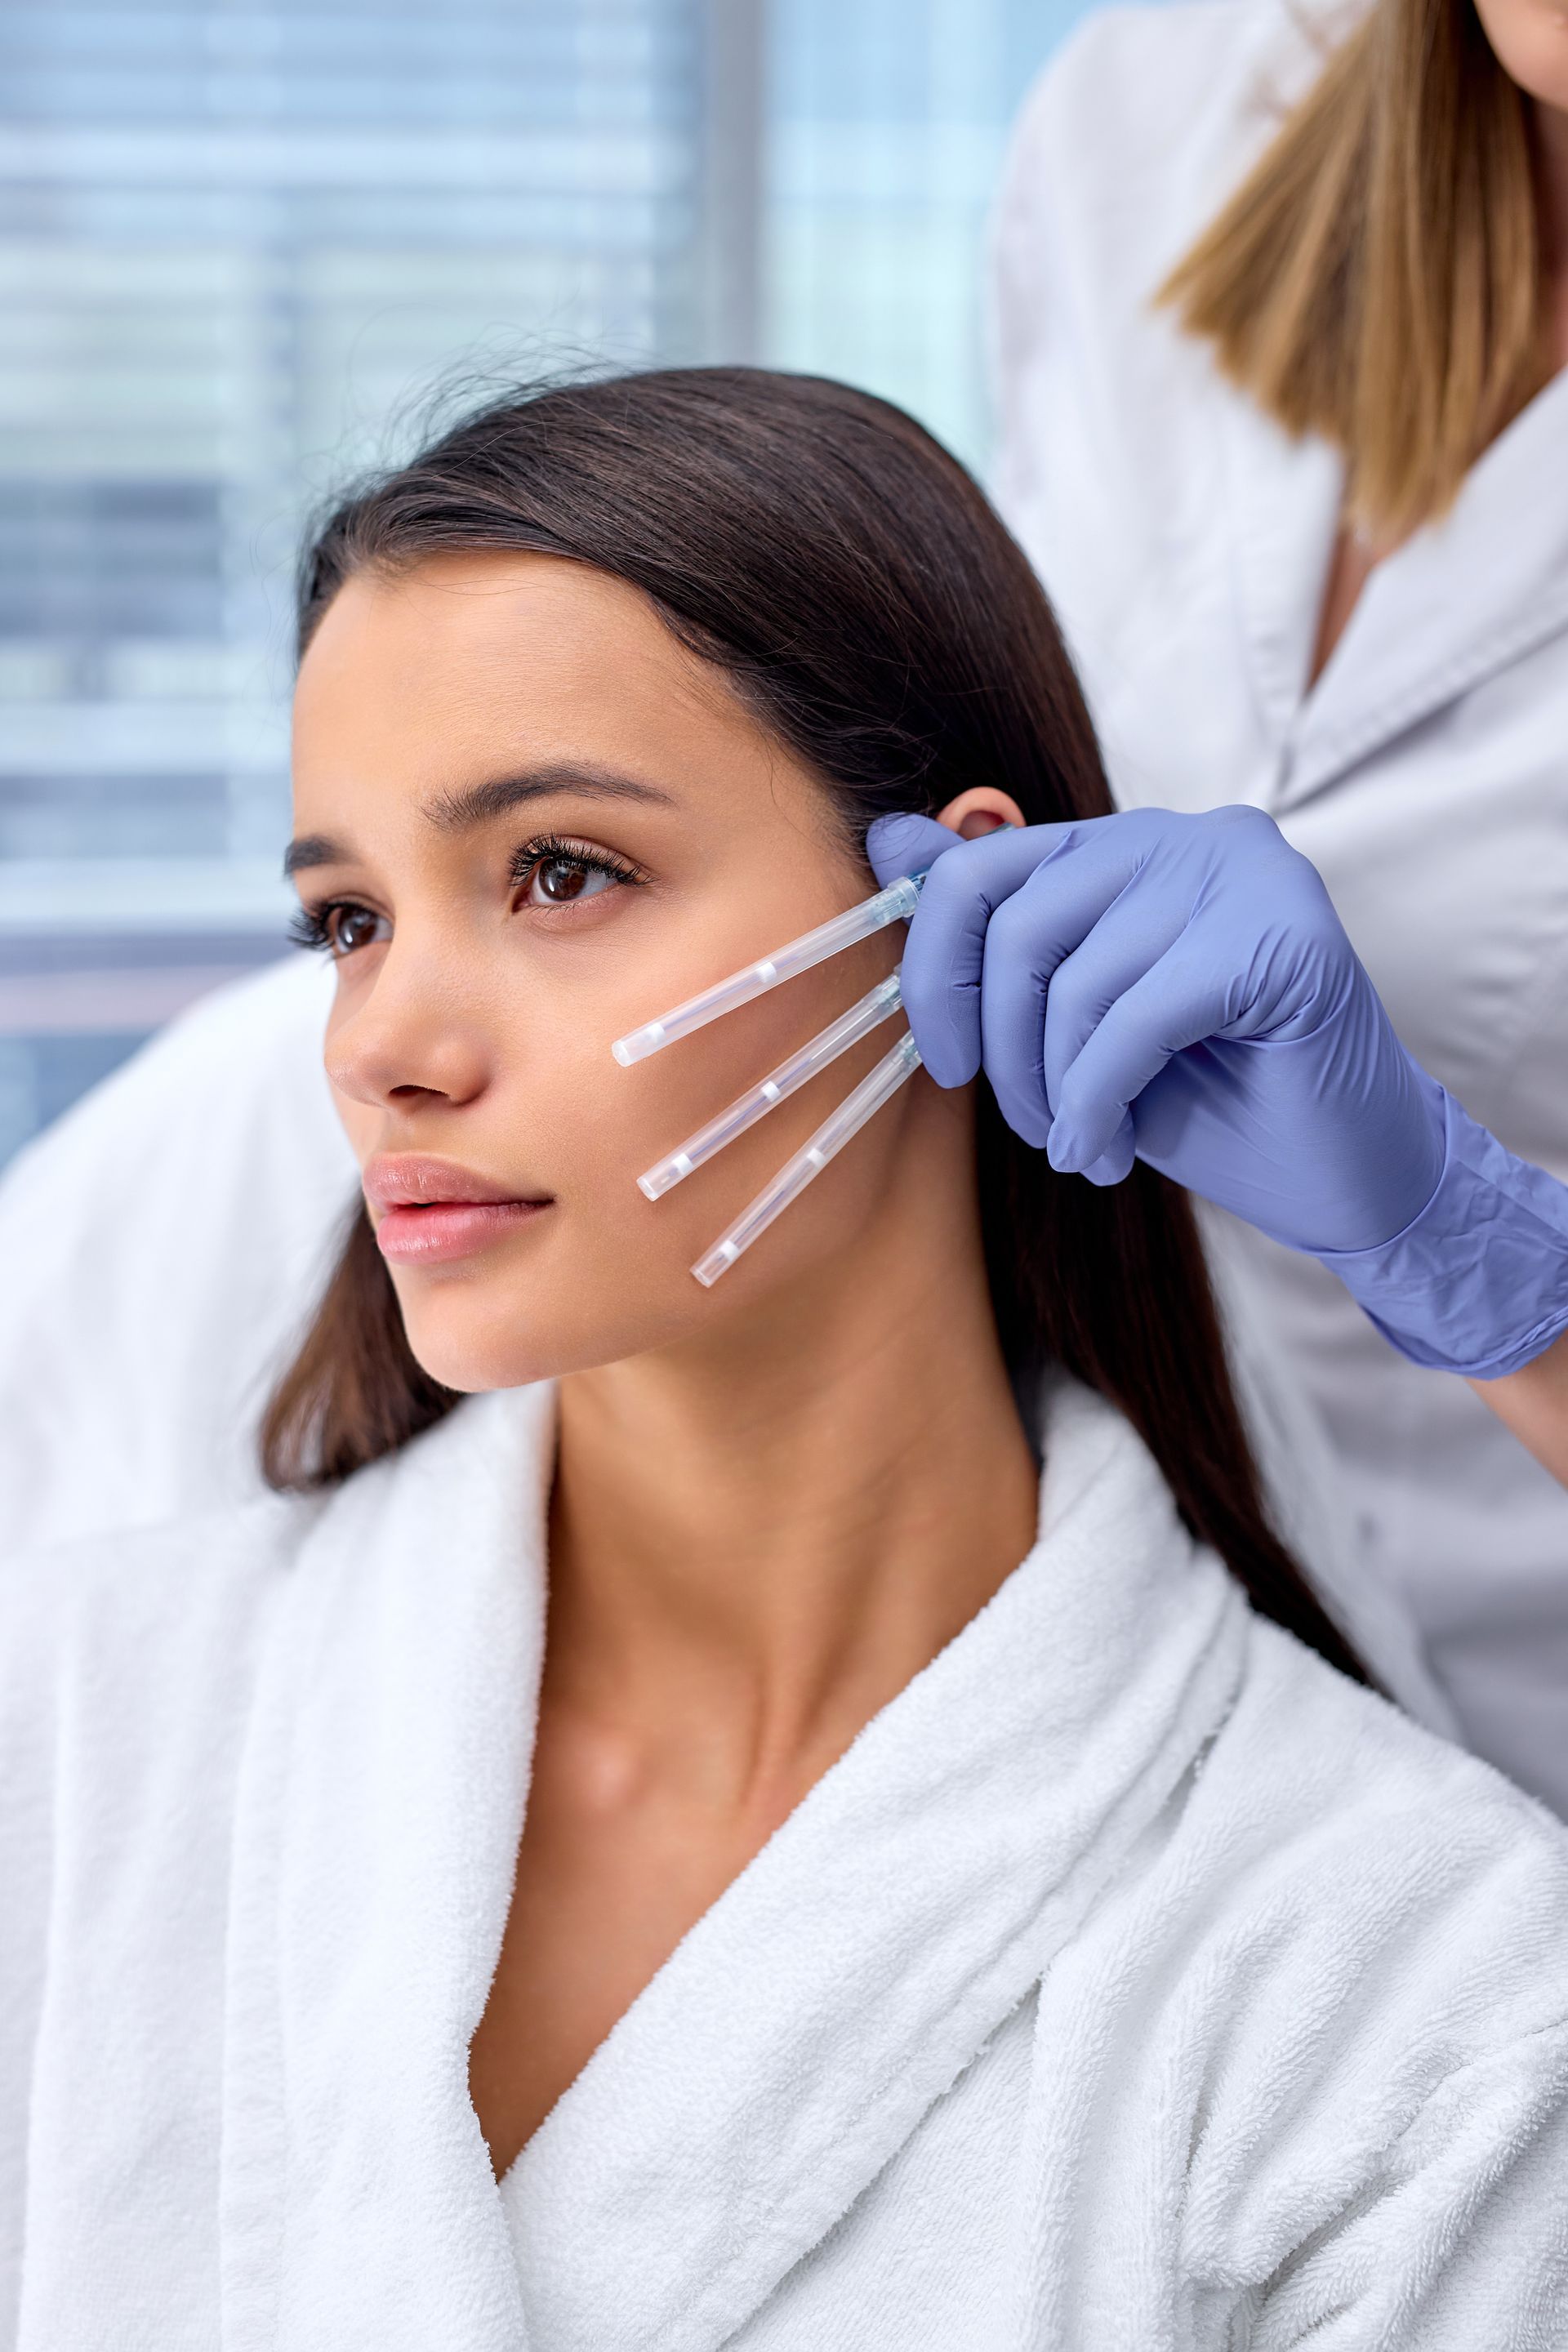 a woman in a white robe is getting a thread lift facial treatment